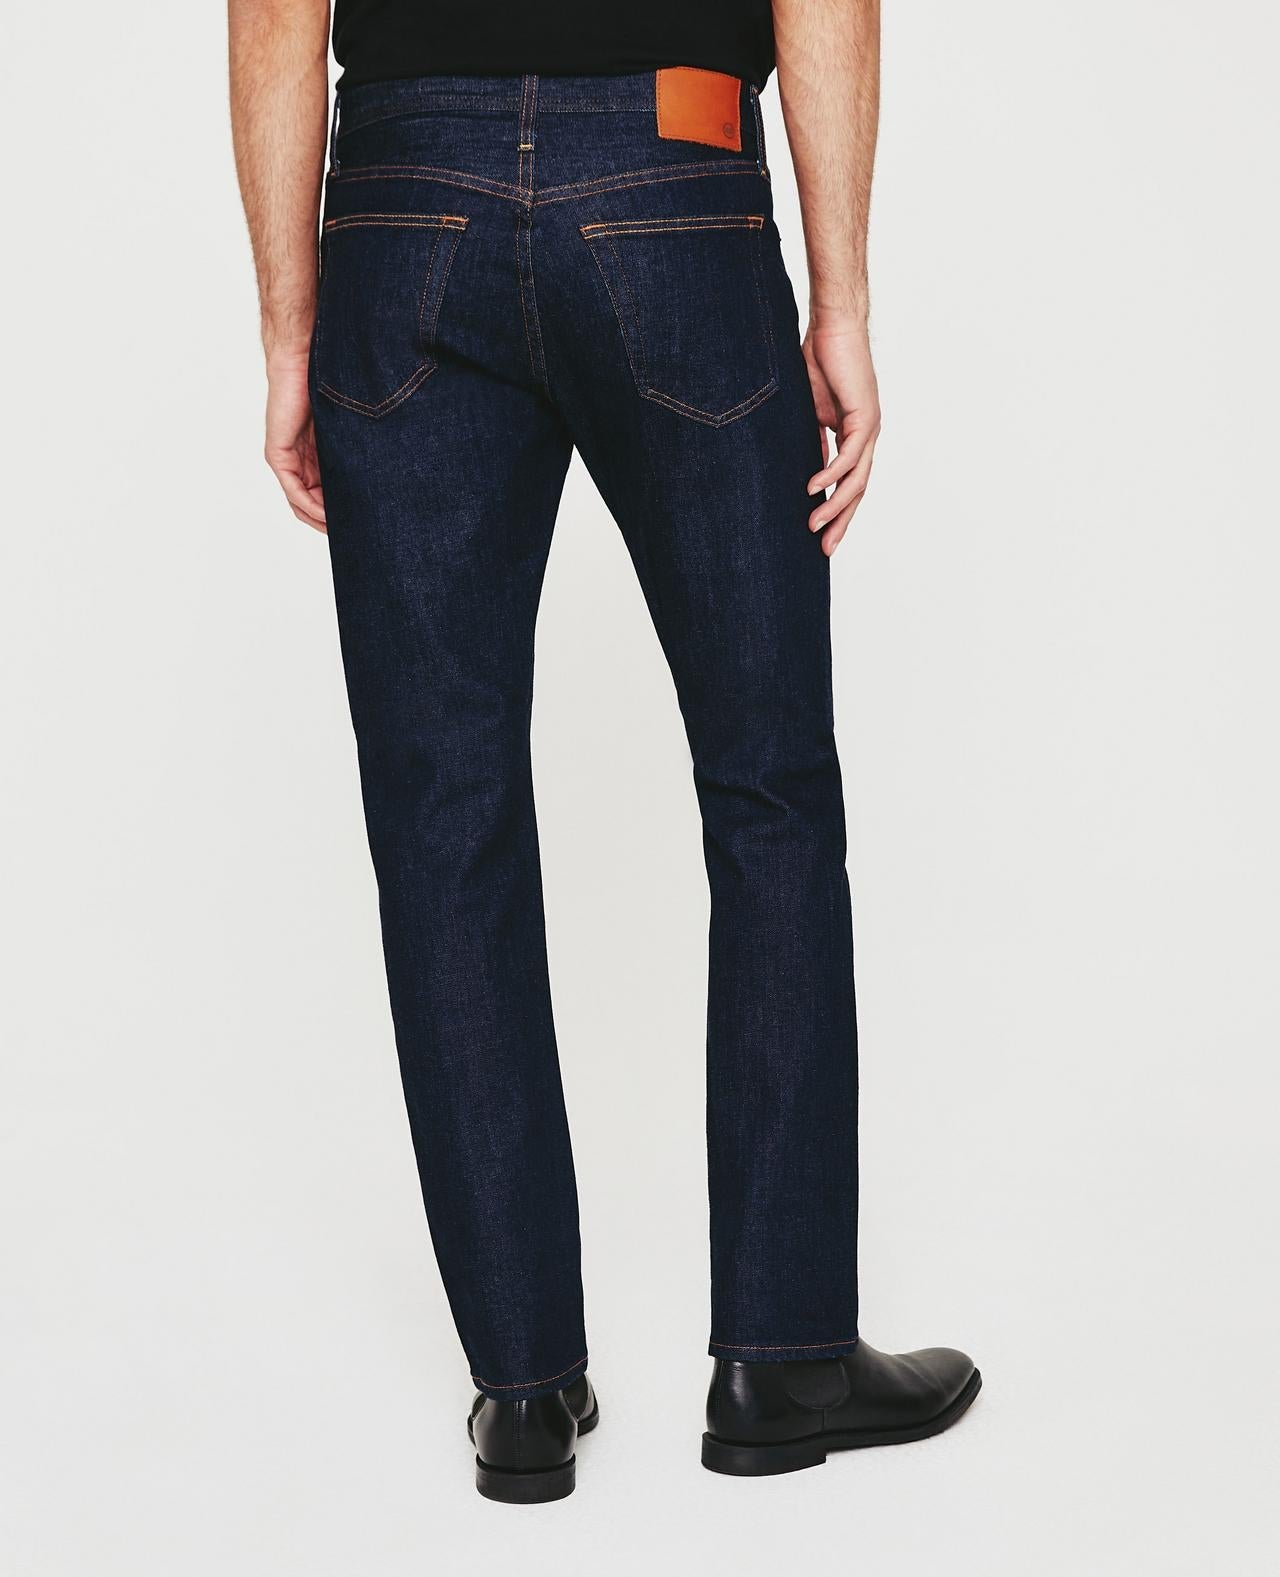 Everett Slim Straight Jean - AG Jeans - Danali - 1794TSY-CUCL-30